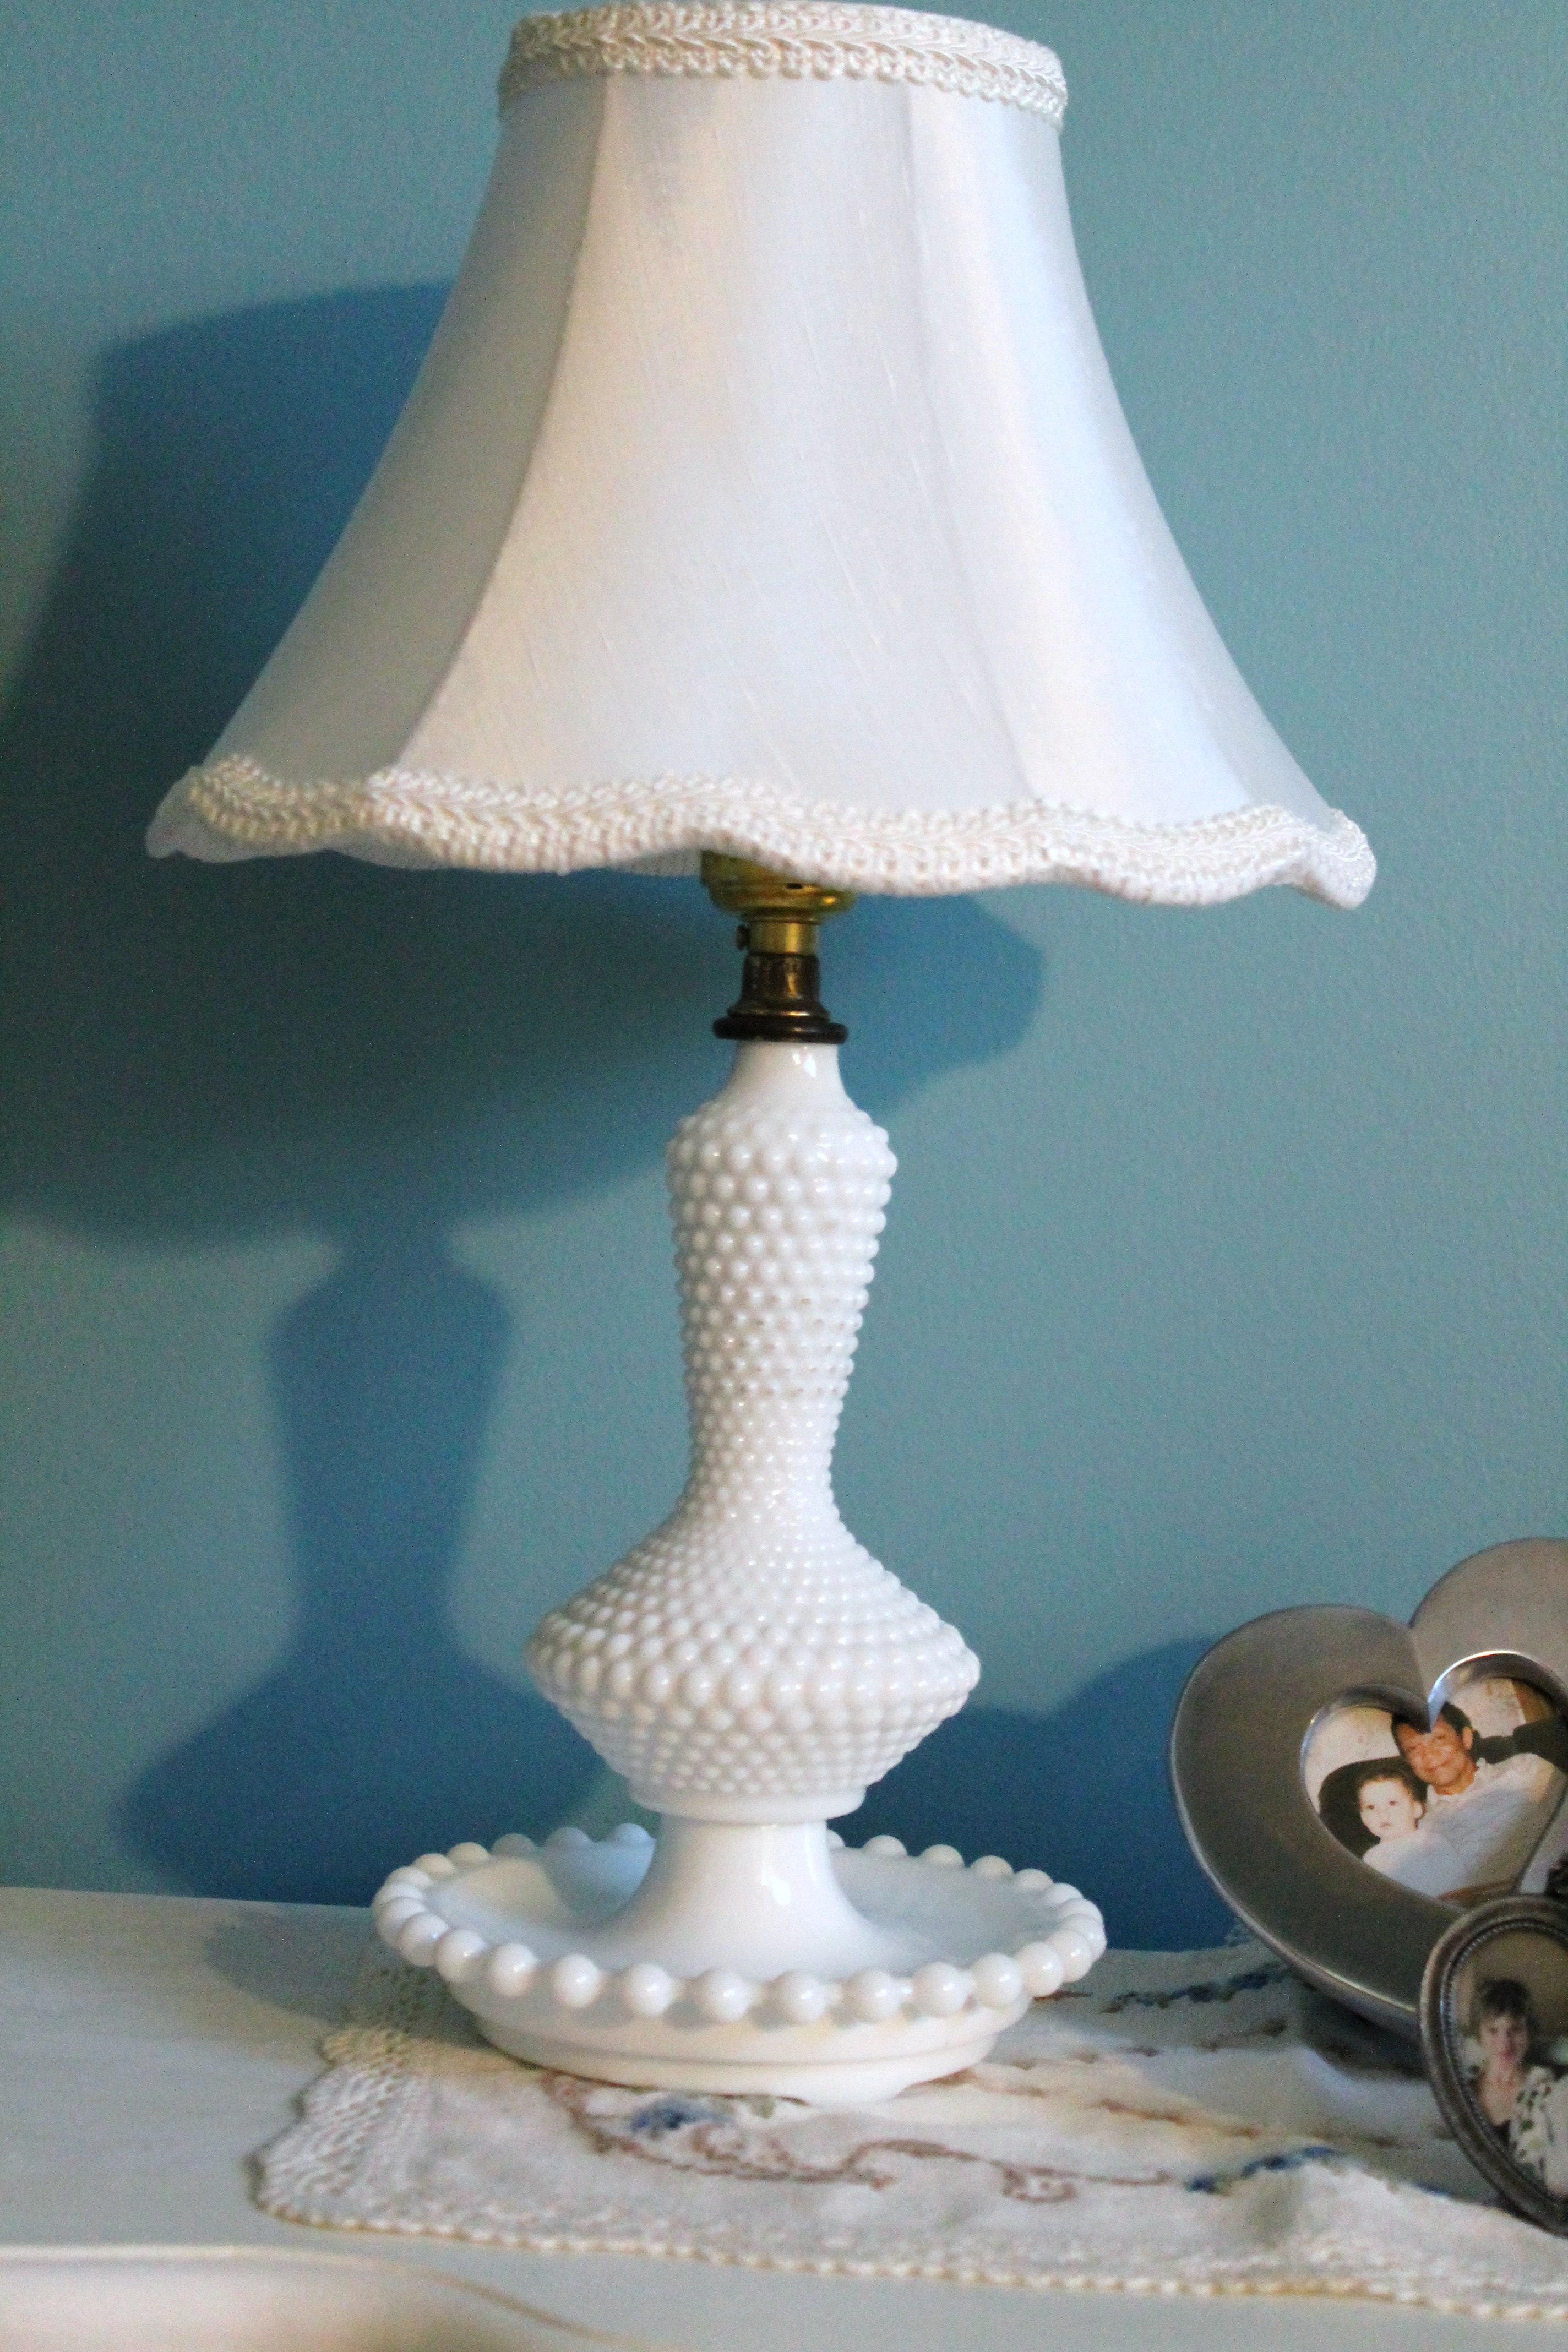 Antique Hobnail Lamps Promotions, Vintage Hobnail Milk Glass Lamp Shade